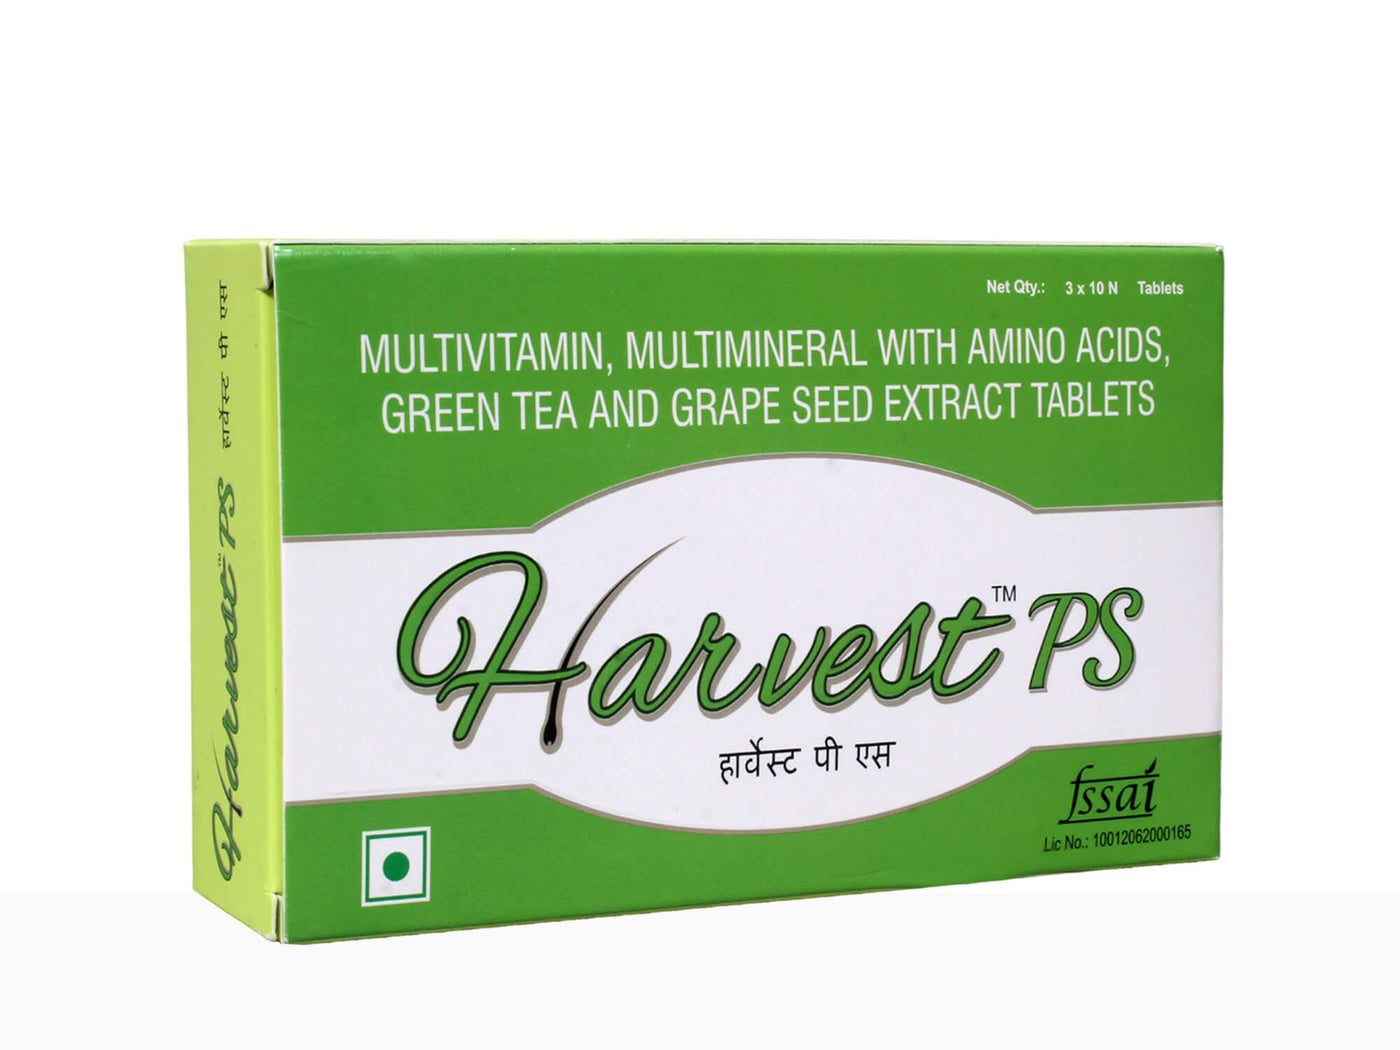 Harvest PS tablets - Clinikally